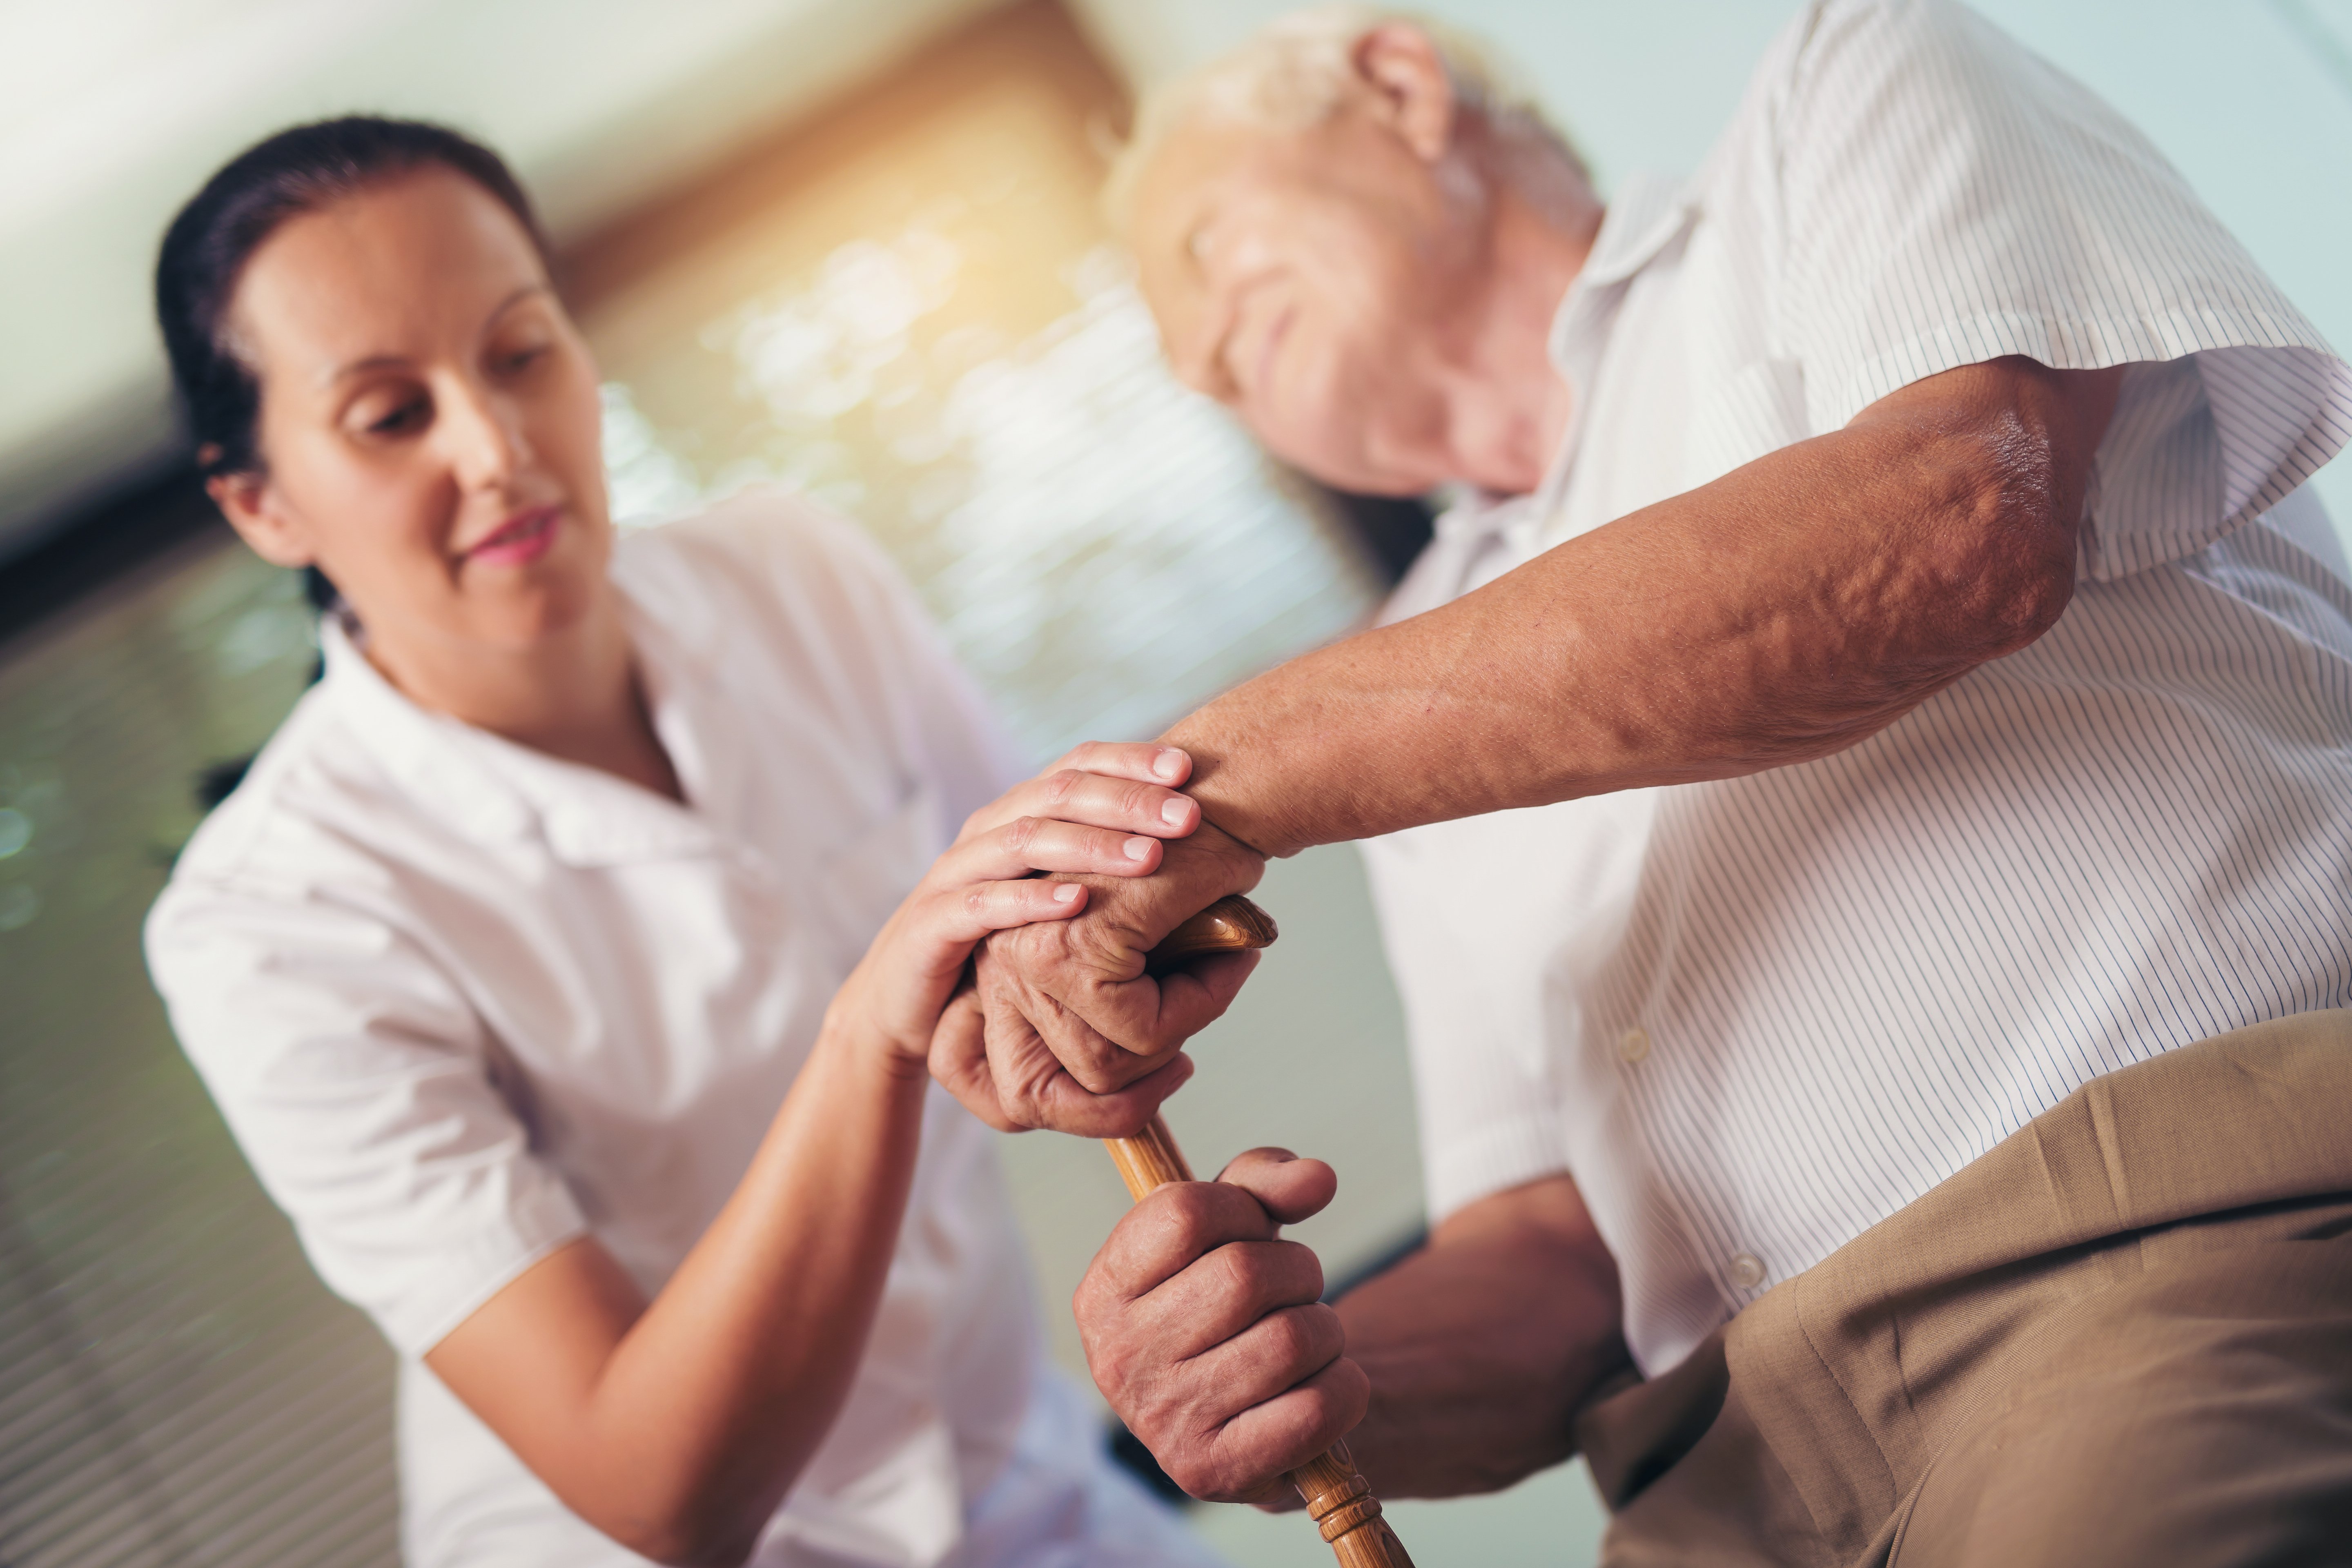 Anciano junto a una enfermera. Fuente: Shutterstock